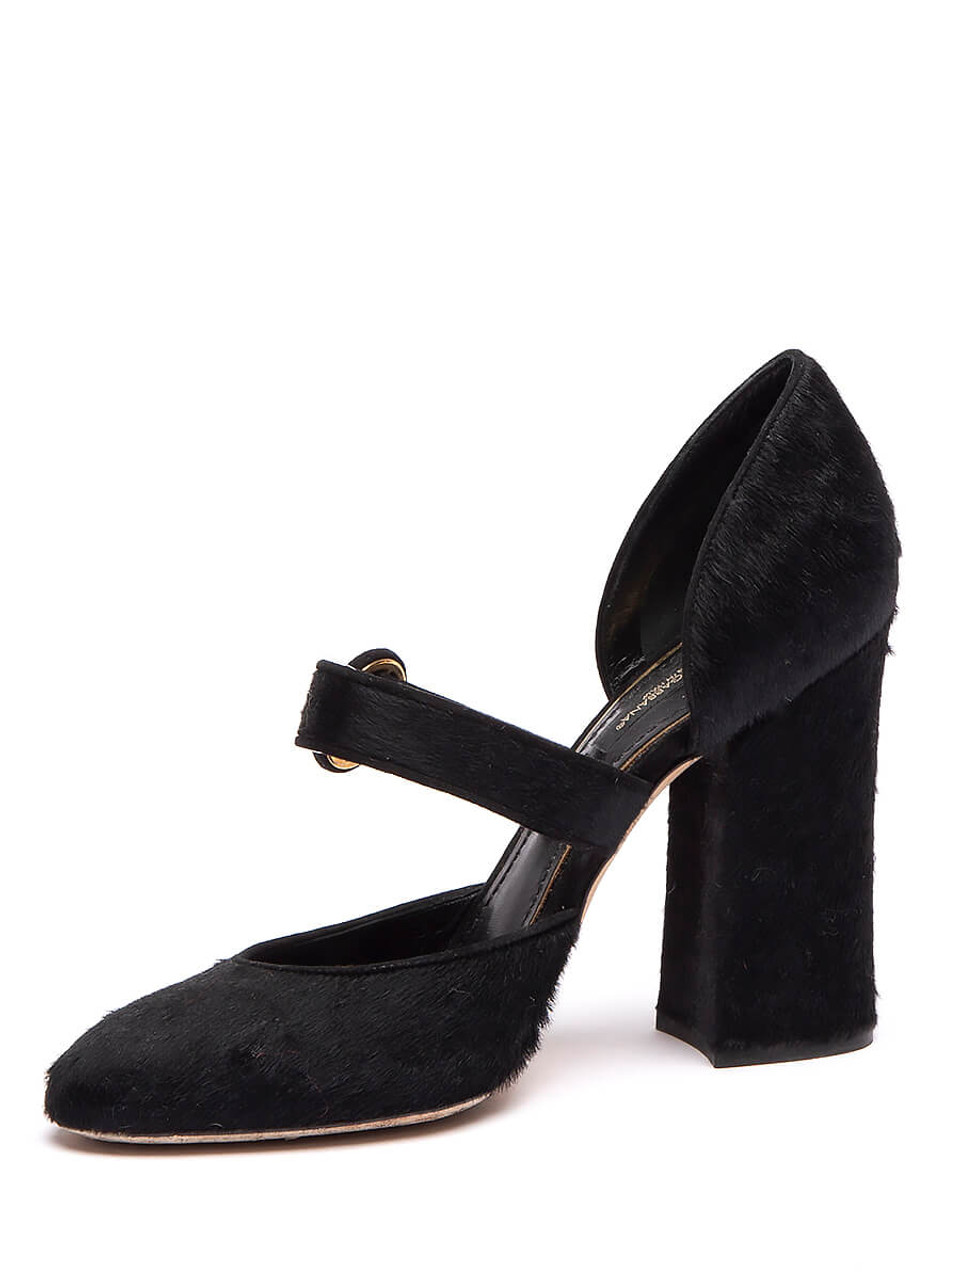 Dolce & Gabbana Women's Mary Jane Block Heels, Size 5 UK, Black, Pony Hair